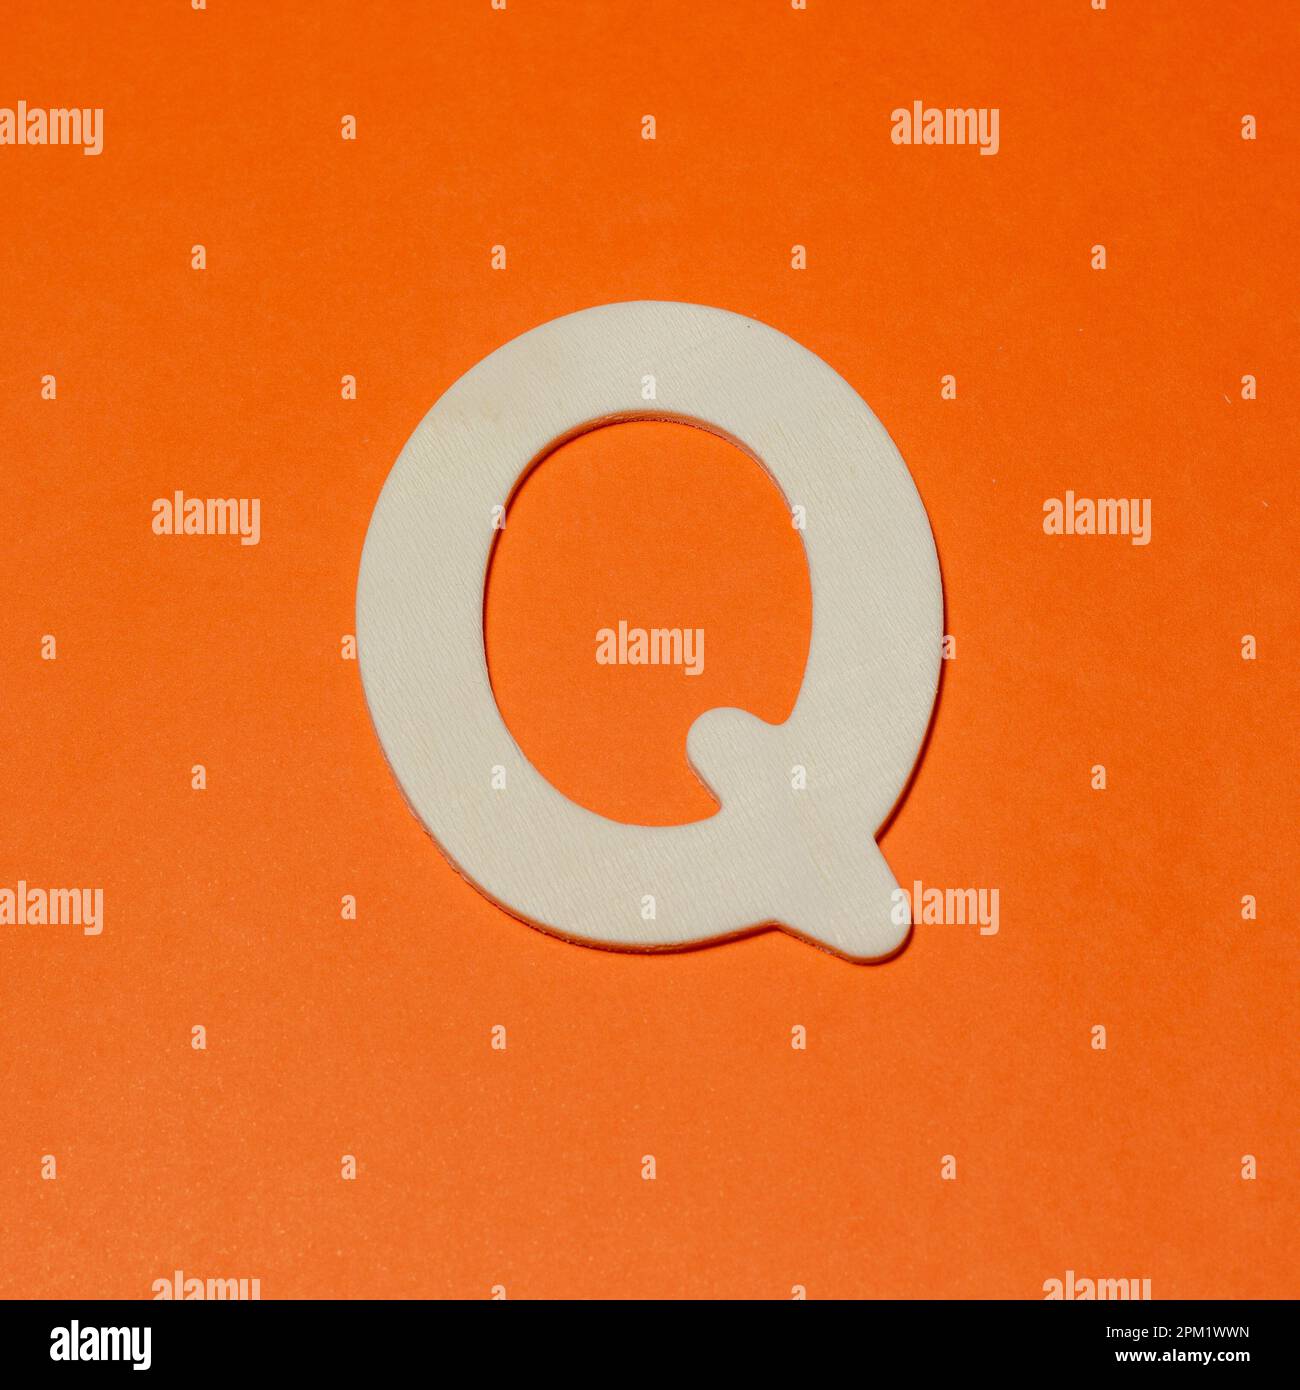 Uppercase letter Q - wood texture - Orange background Stock Photo